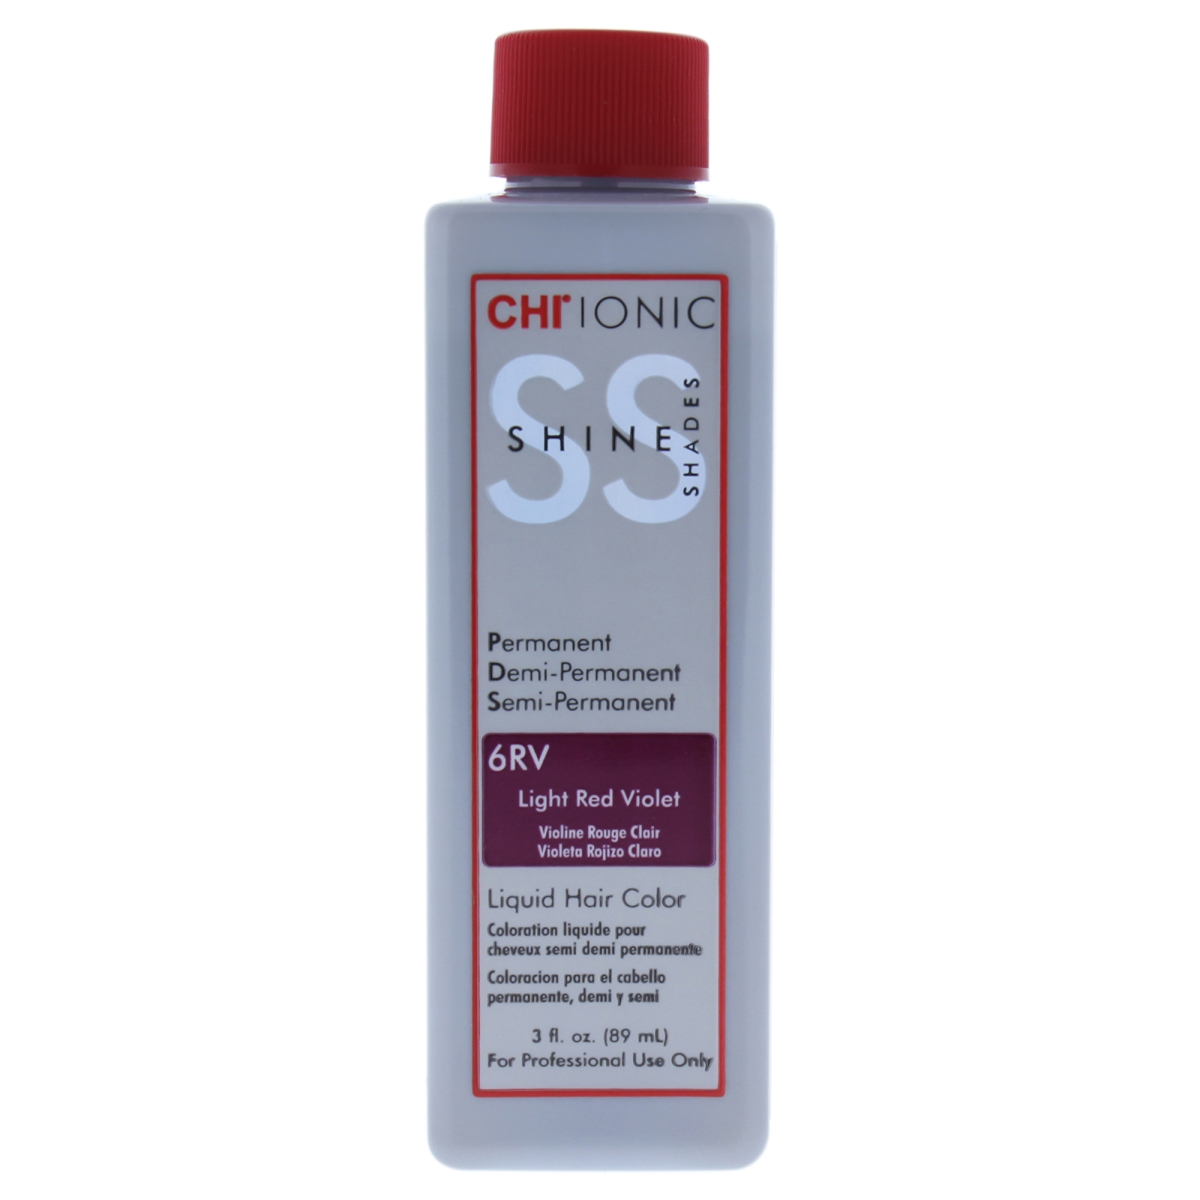 I0084037 Ionic Shine Shades Liquid Hair Color For Unisex - 6rv Light Red Violet - 3 Oz